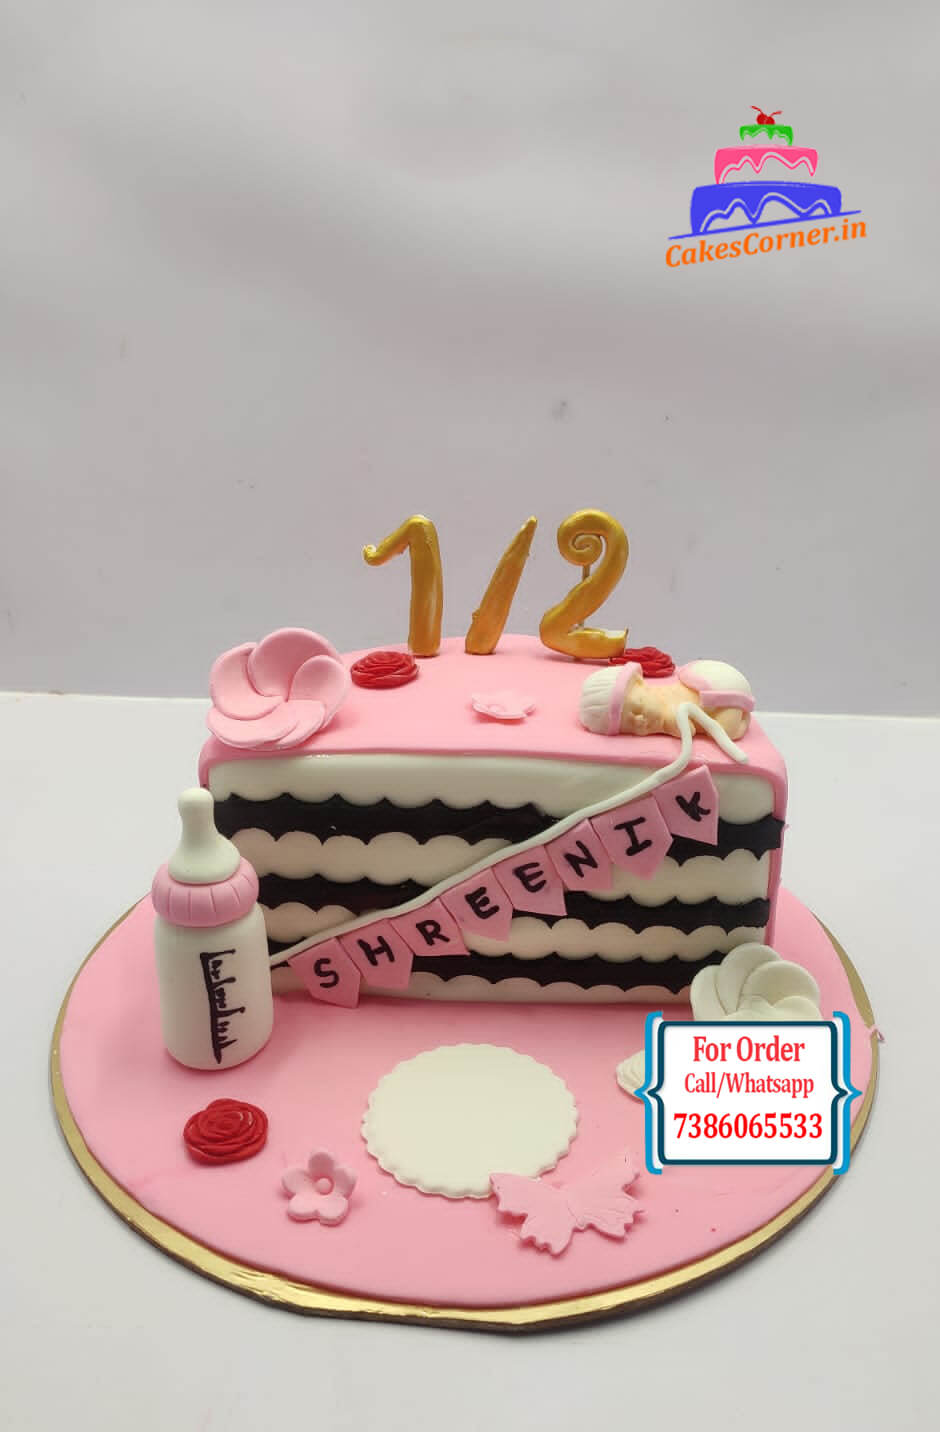 Half Year Birthday Theme Cake